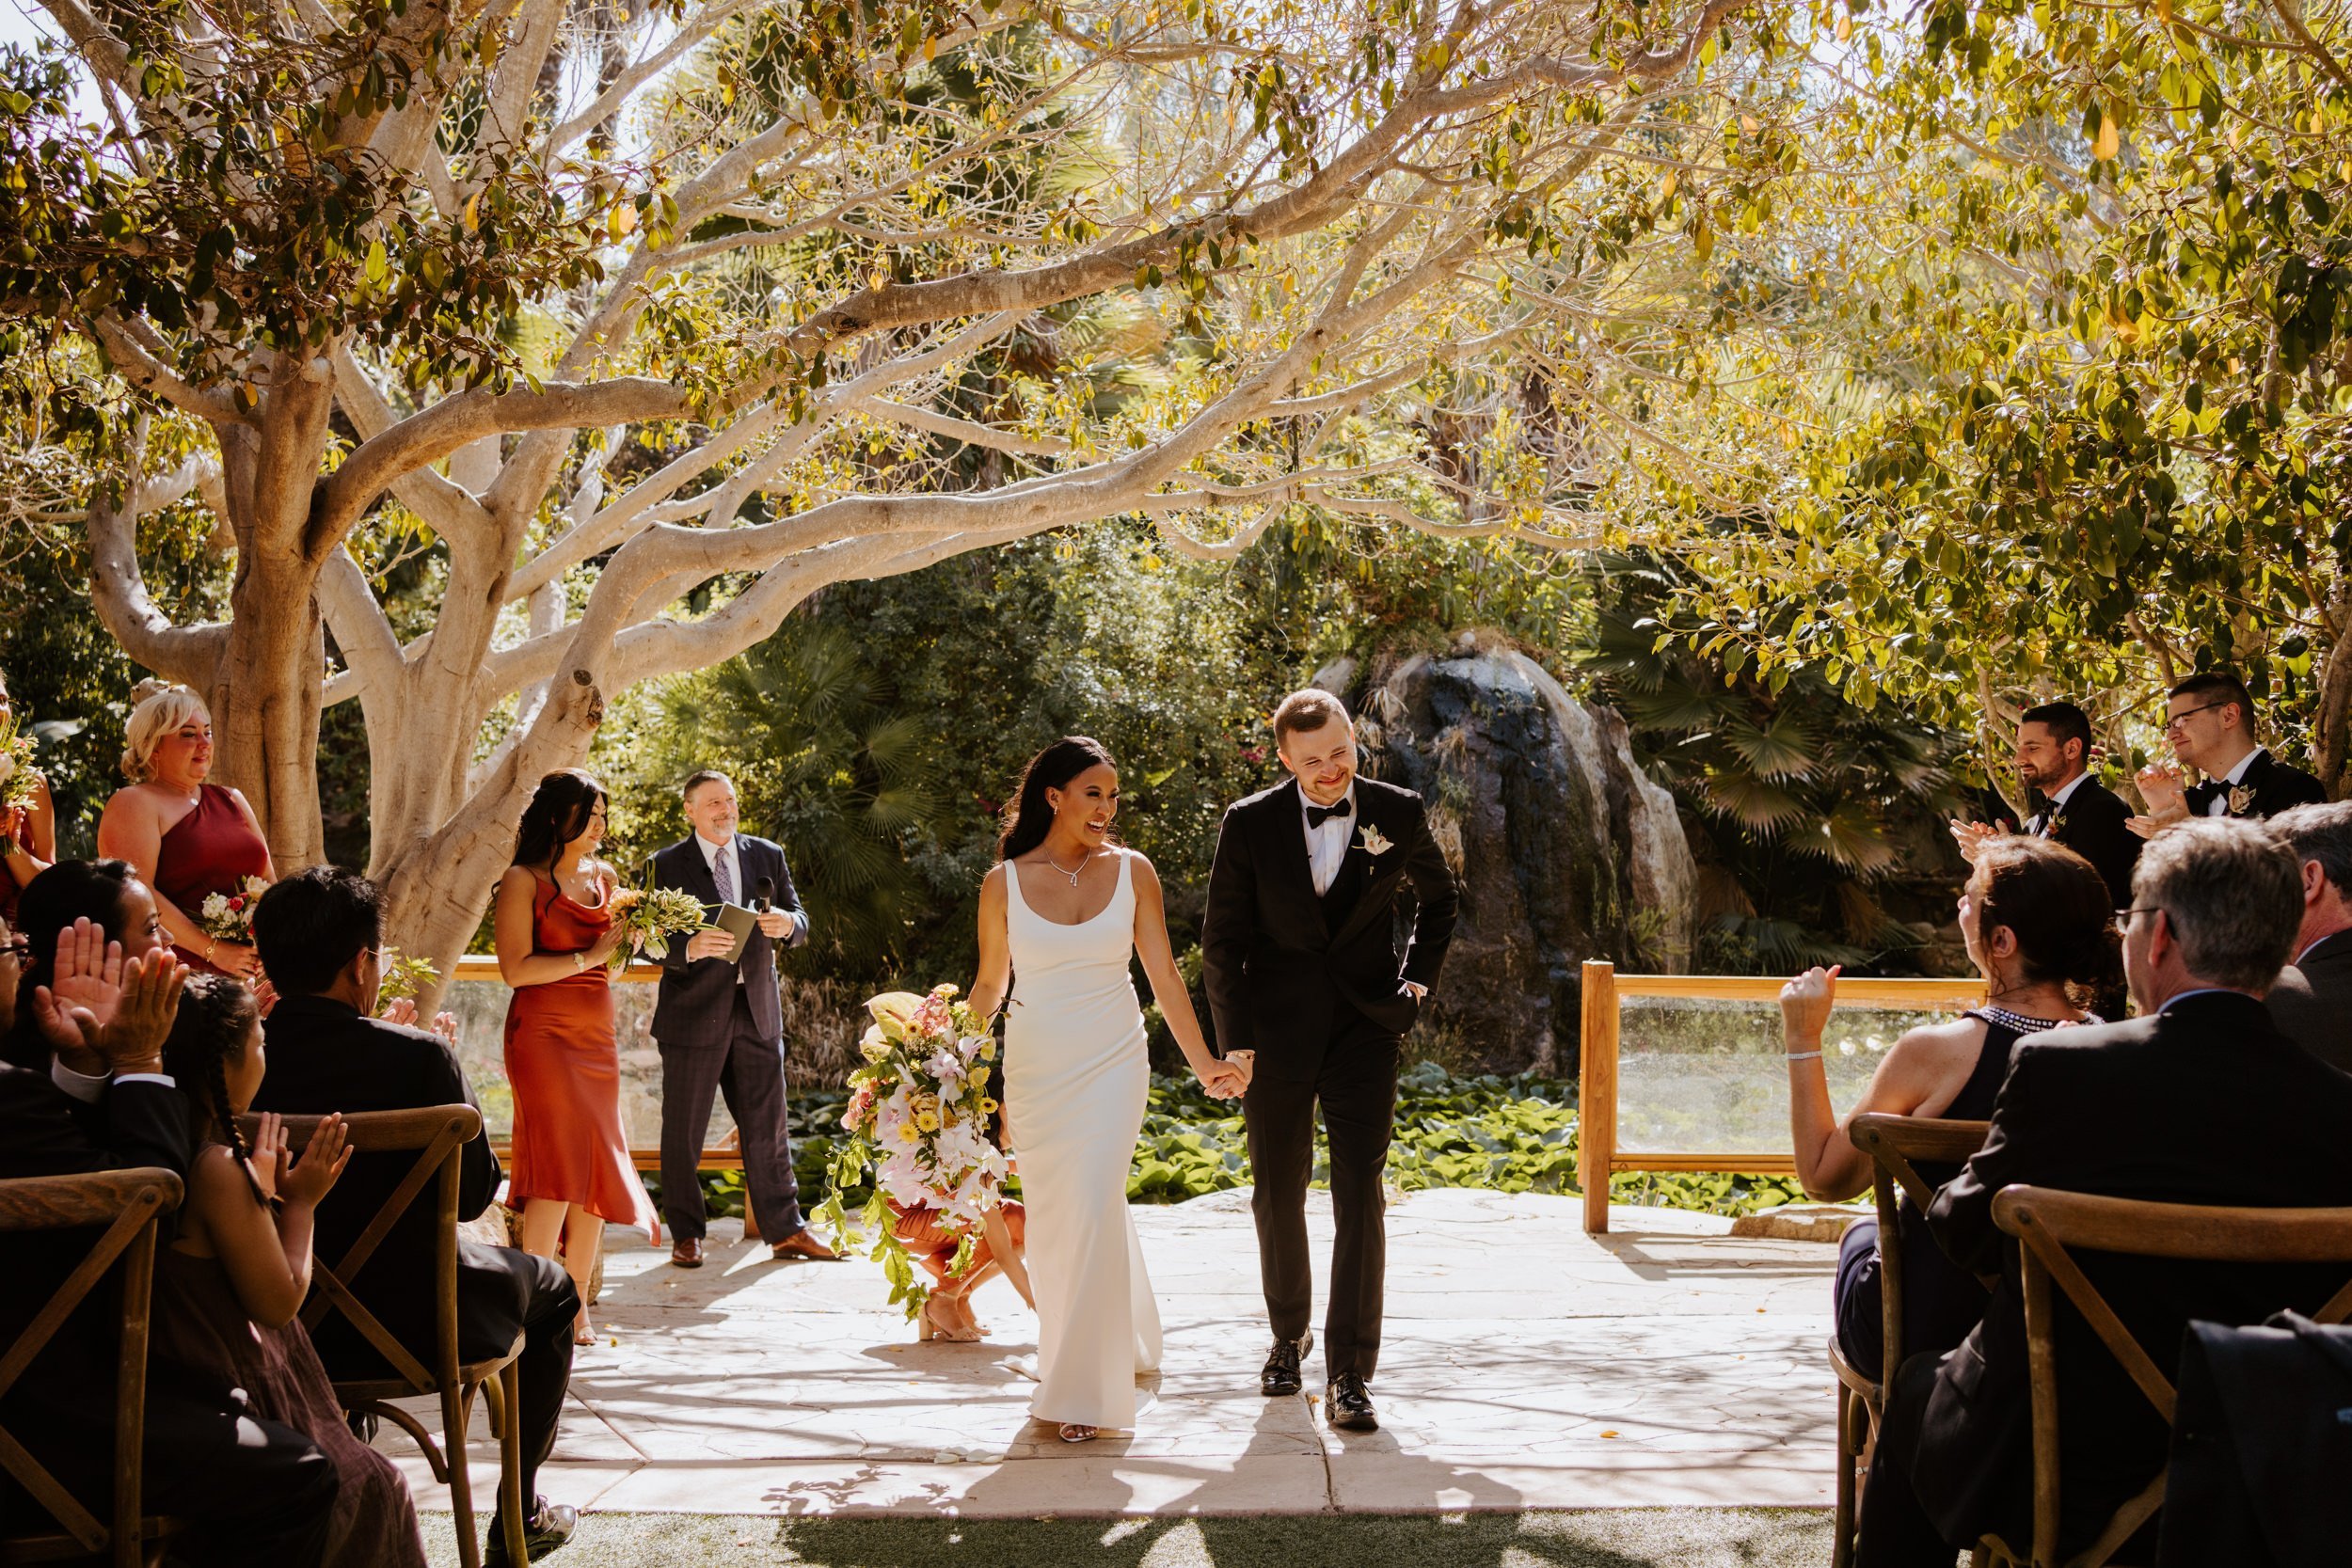 Botanica Oceanside wedding ceremony, San Diego wedding venue, photo by TIda Svy, San Diego wedding photographer